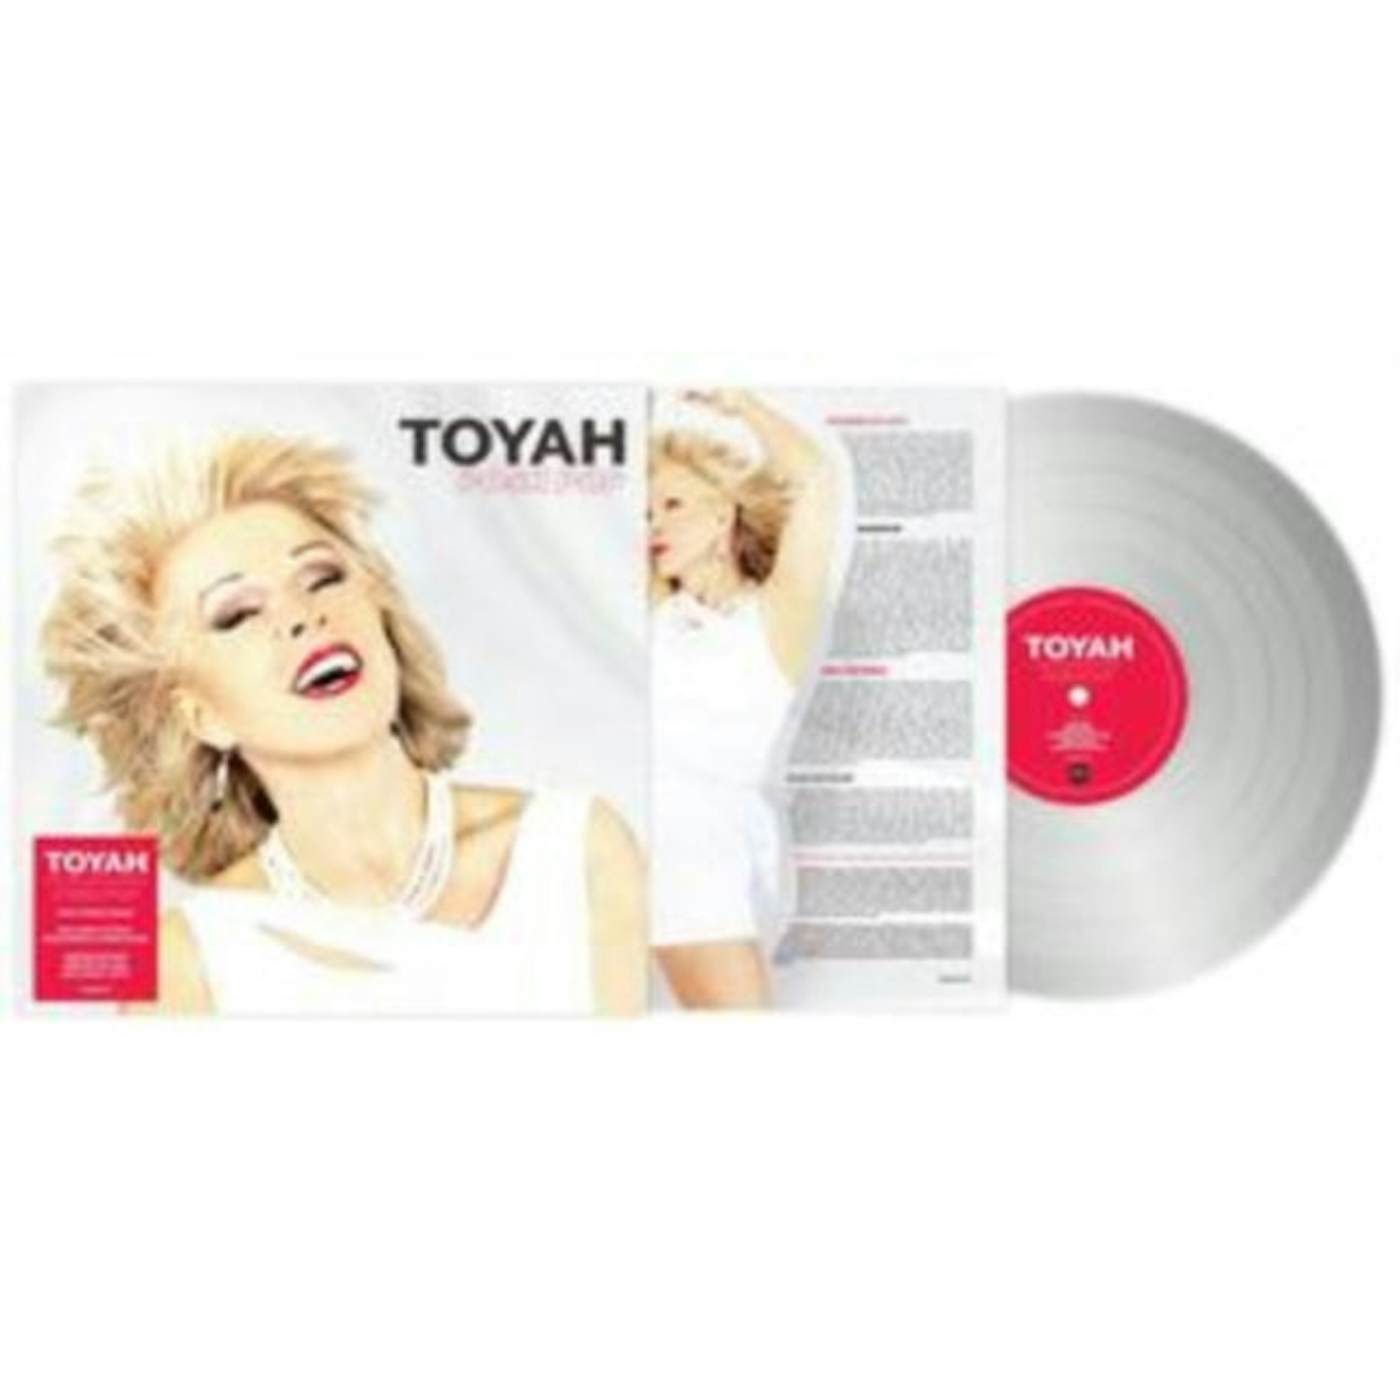 Toyah LP Vinyl Record - Posh Pop (Space Grey Vinyl)